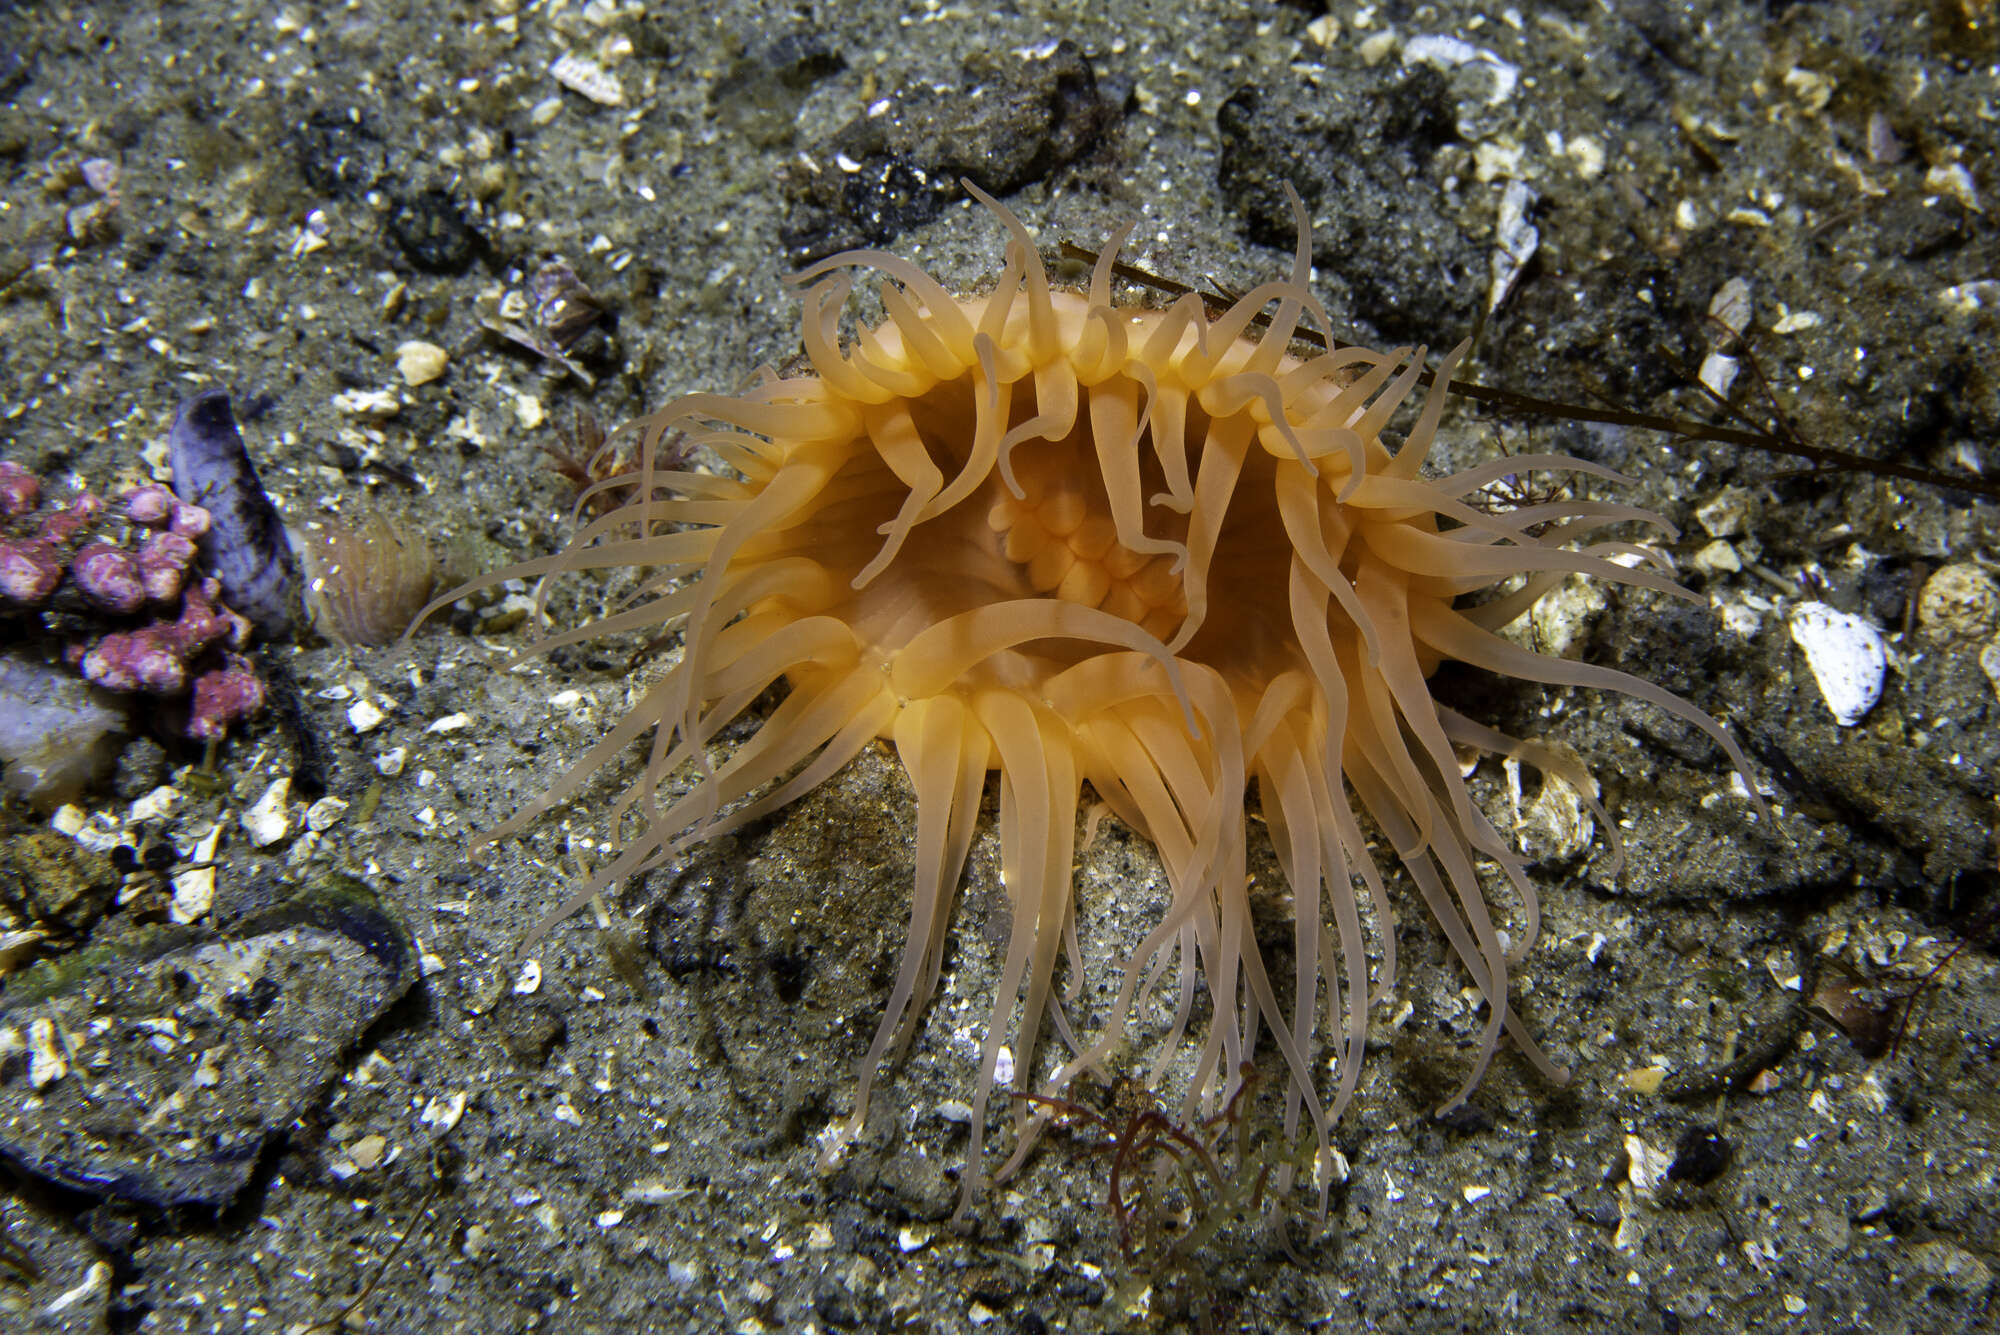 Image of maned sea anemone